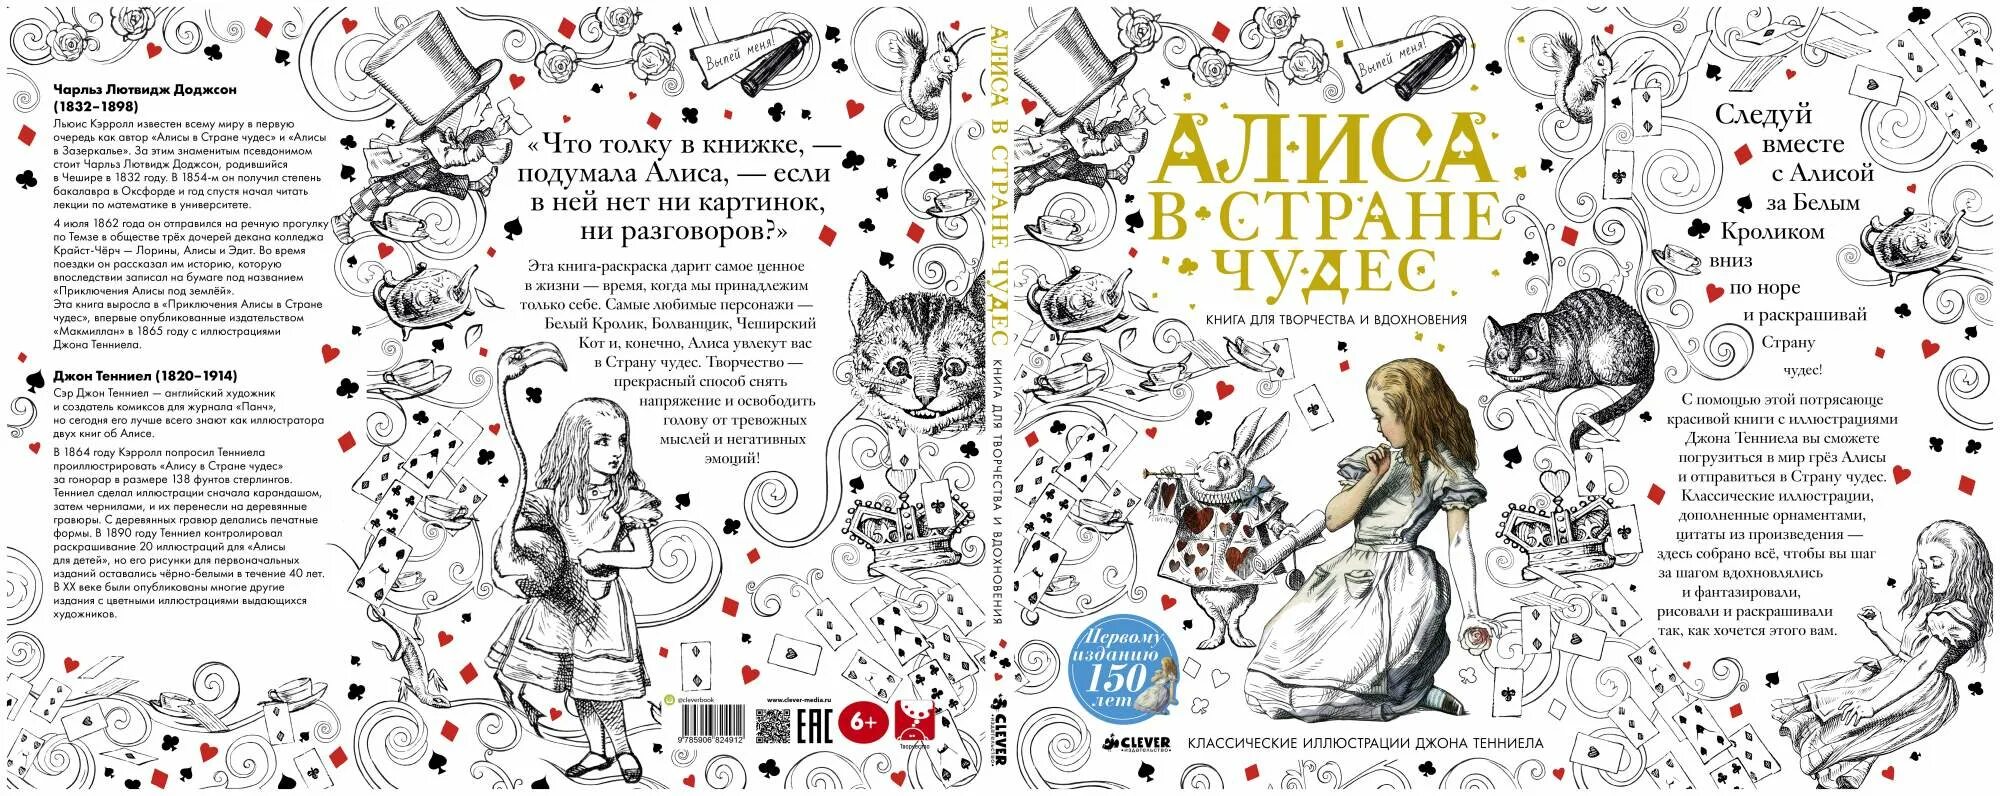 Алиса в стране загадок. Алиса в стране чудес задания. Задания по книге про Алису в стране чудес. Алиса в стране чудес обложка книги. Книги для творчества и вдохновения.